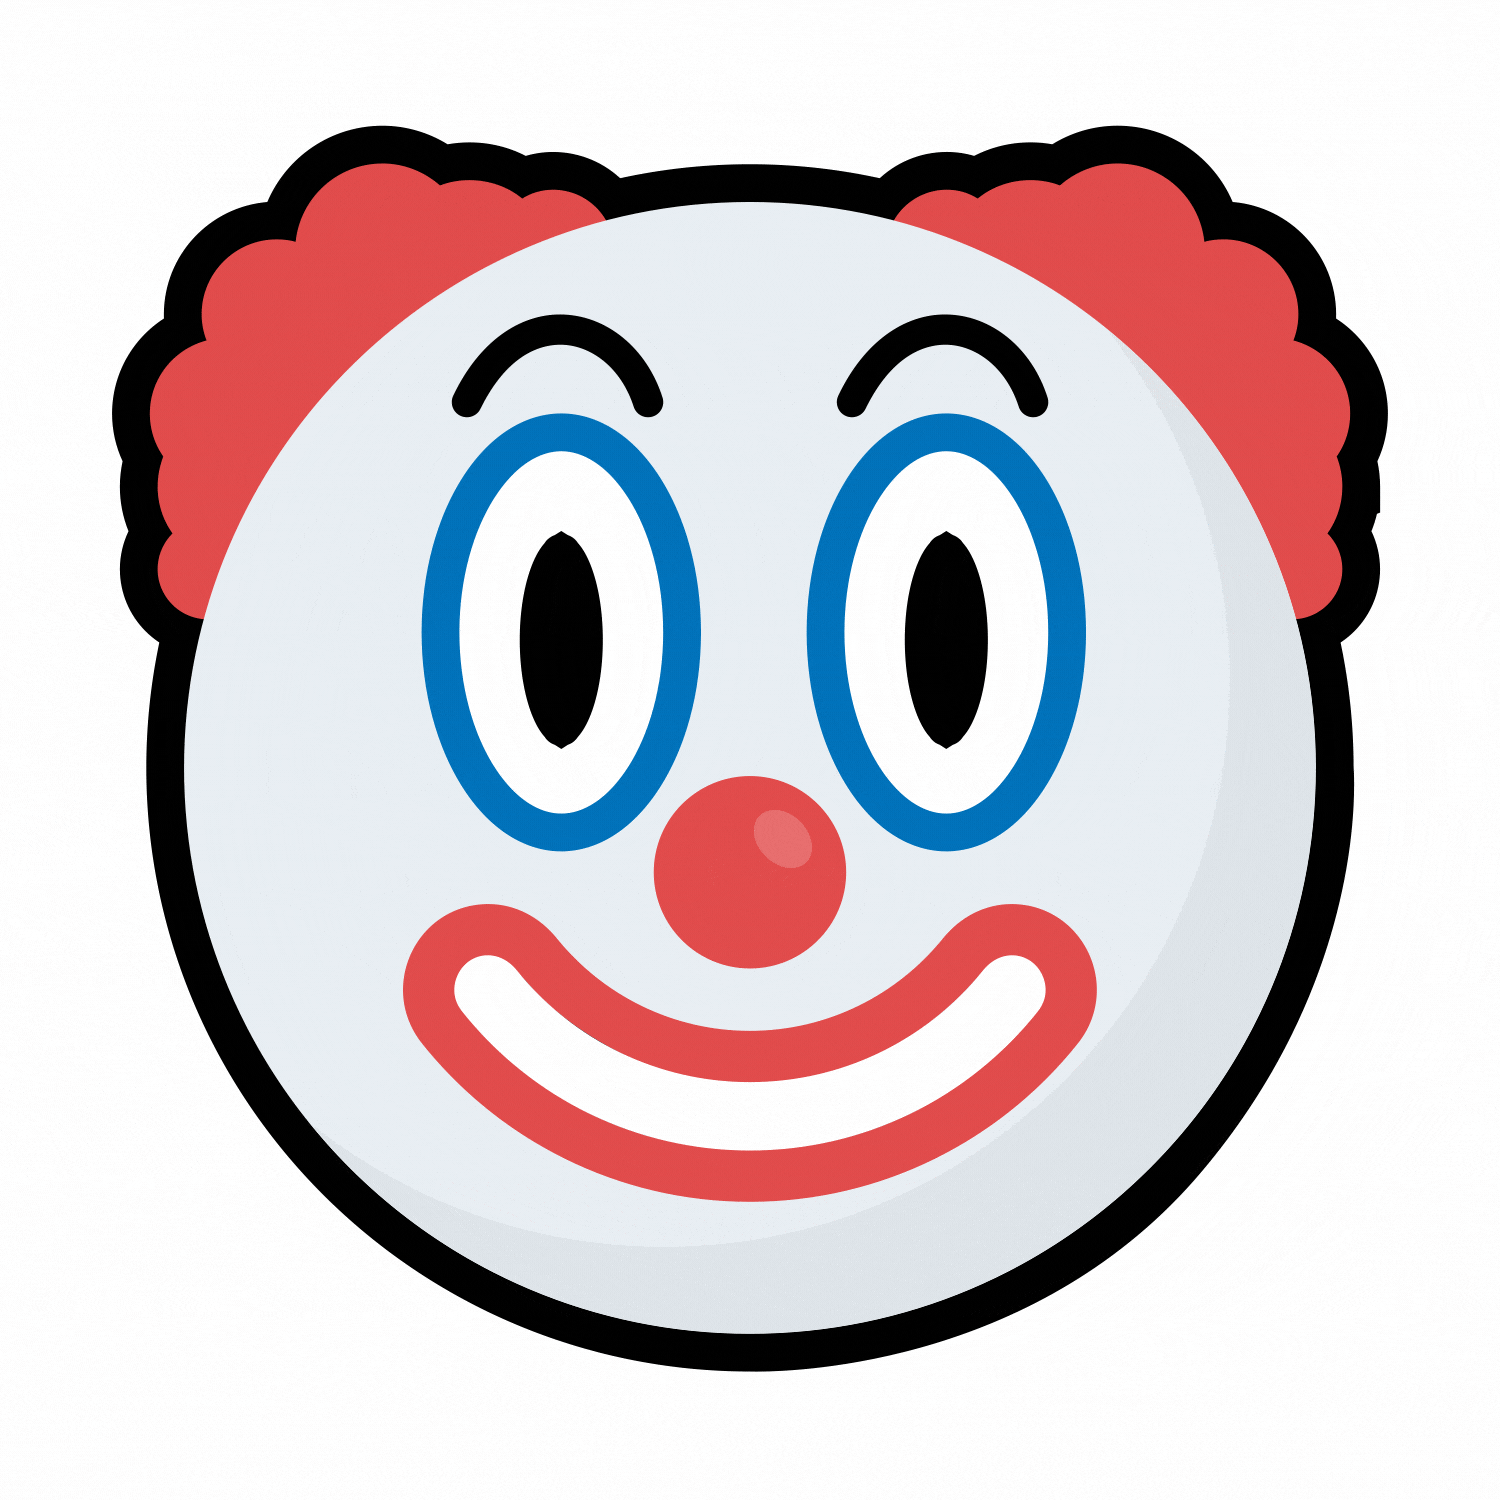 Clown emoji animation animation clown emoji emotion irony sarcasm